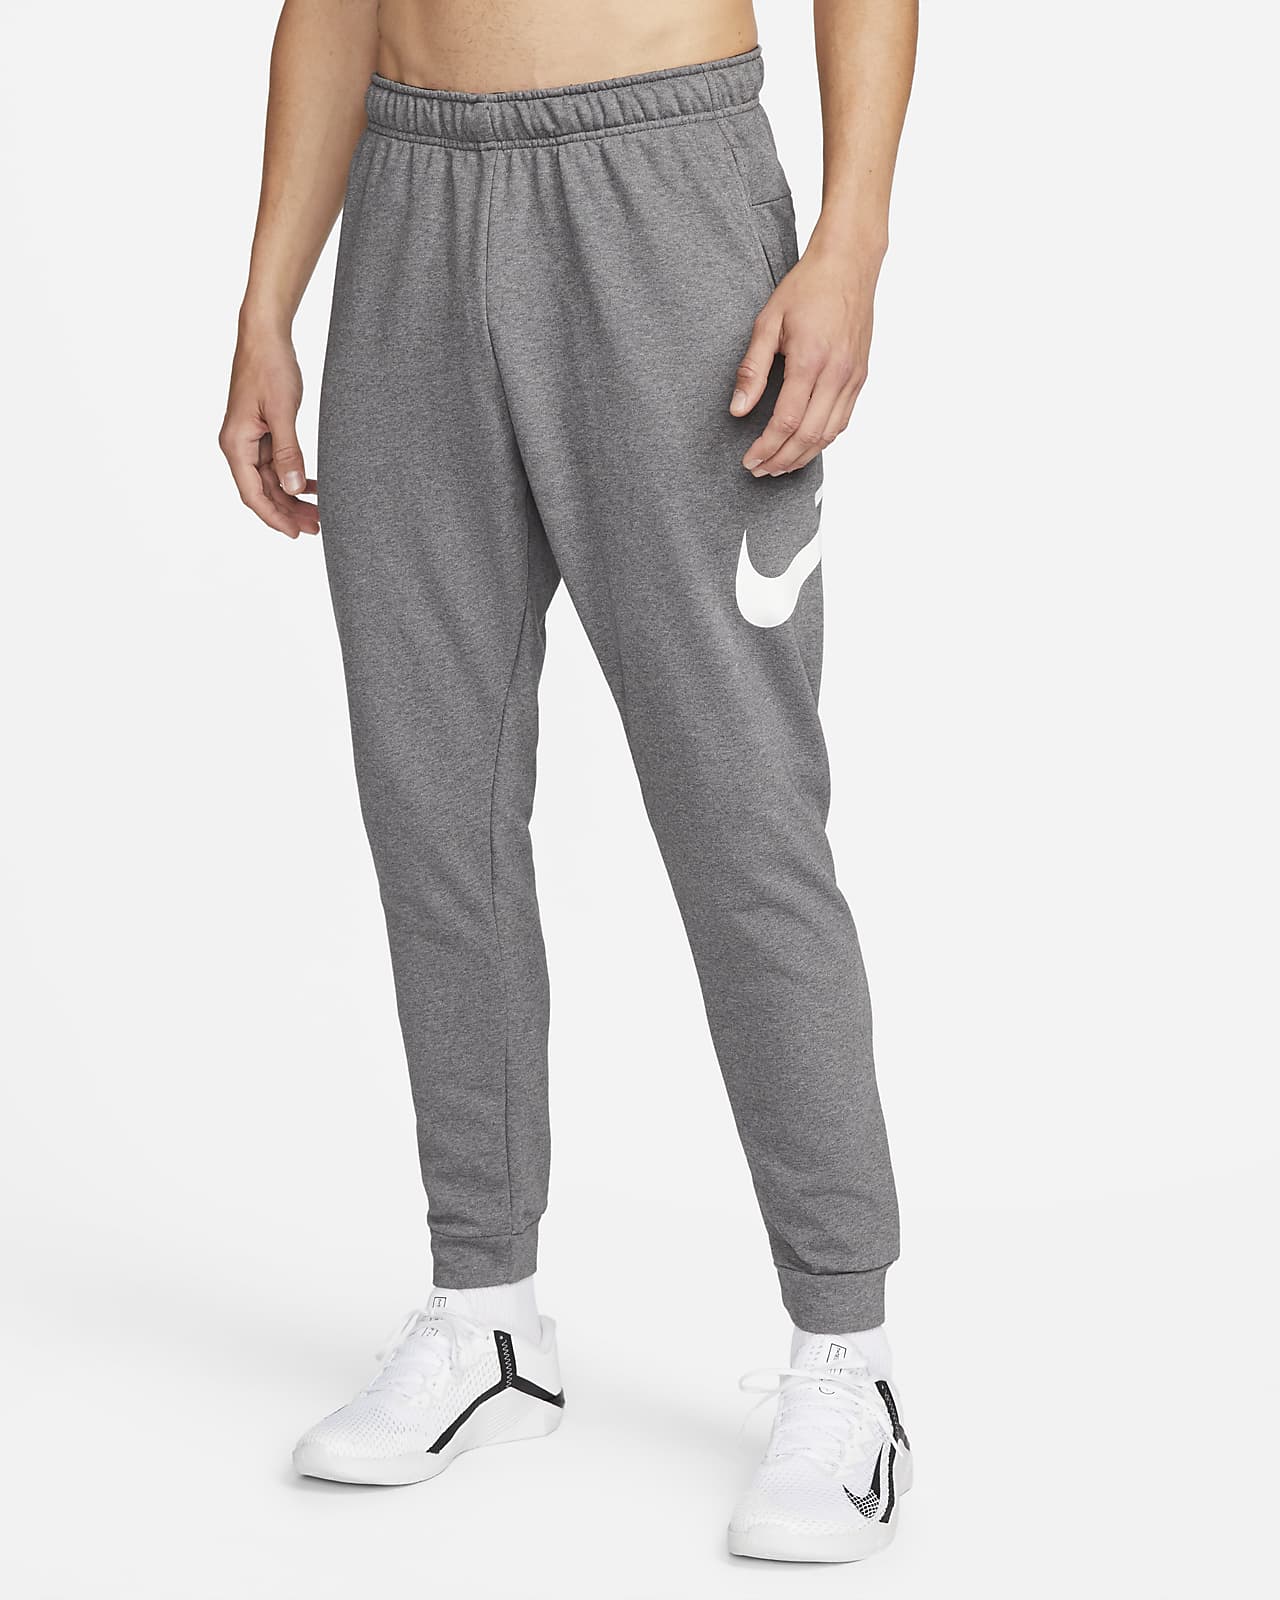 Nike Dri Fit Dry Training Fleece Pants Grey 742212-065 Men's Size XL – ASA  College: Florida